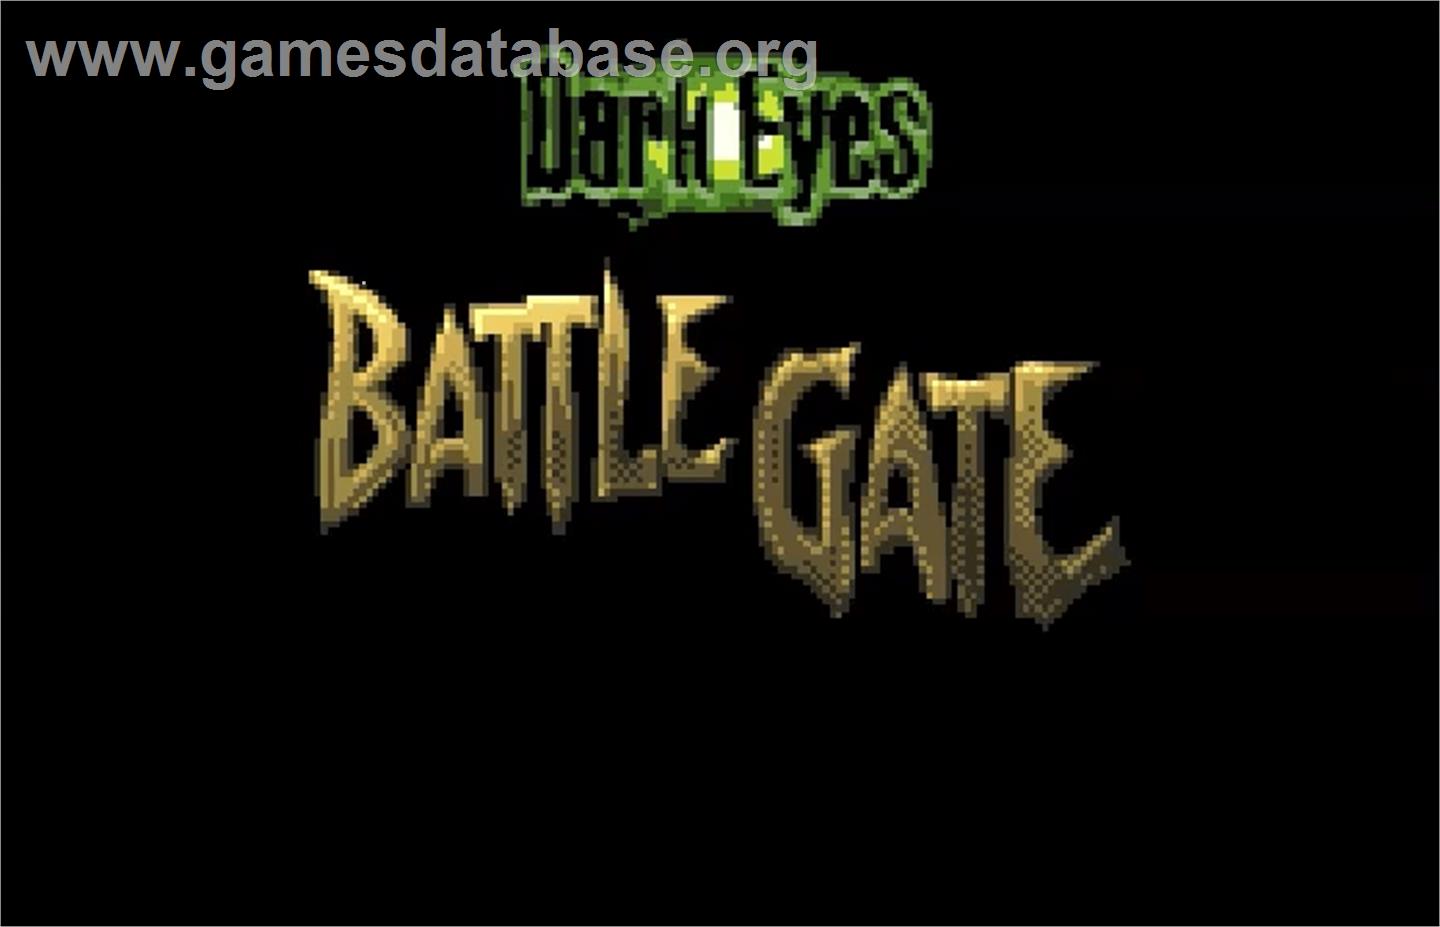 Dark Eyes: Battle Gate - Bandai WonderSwan Color - Artwork - Title Screen